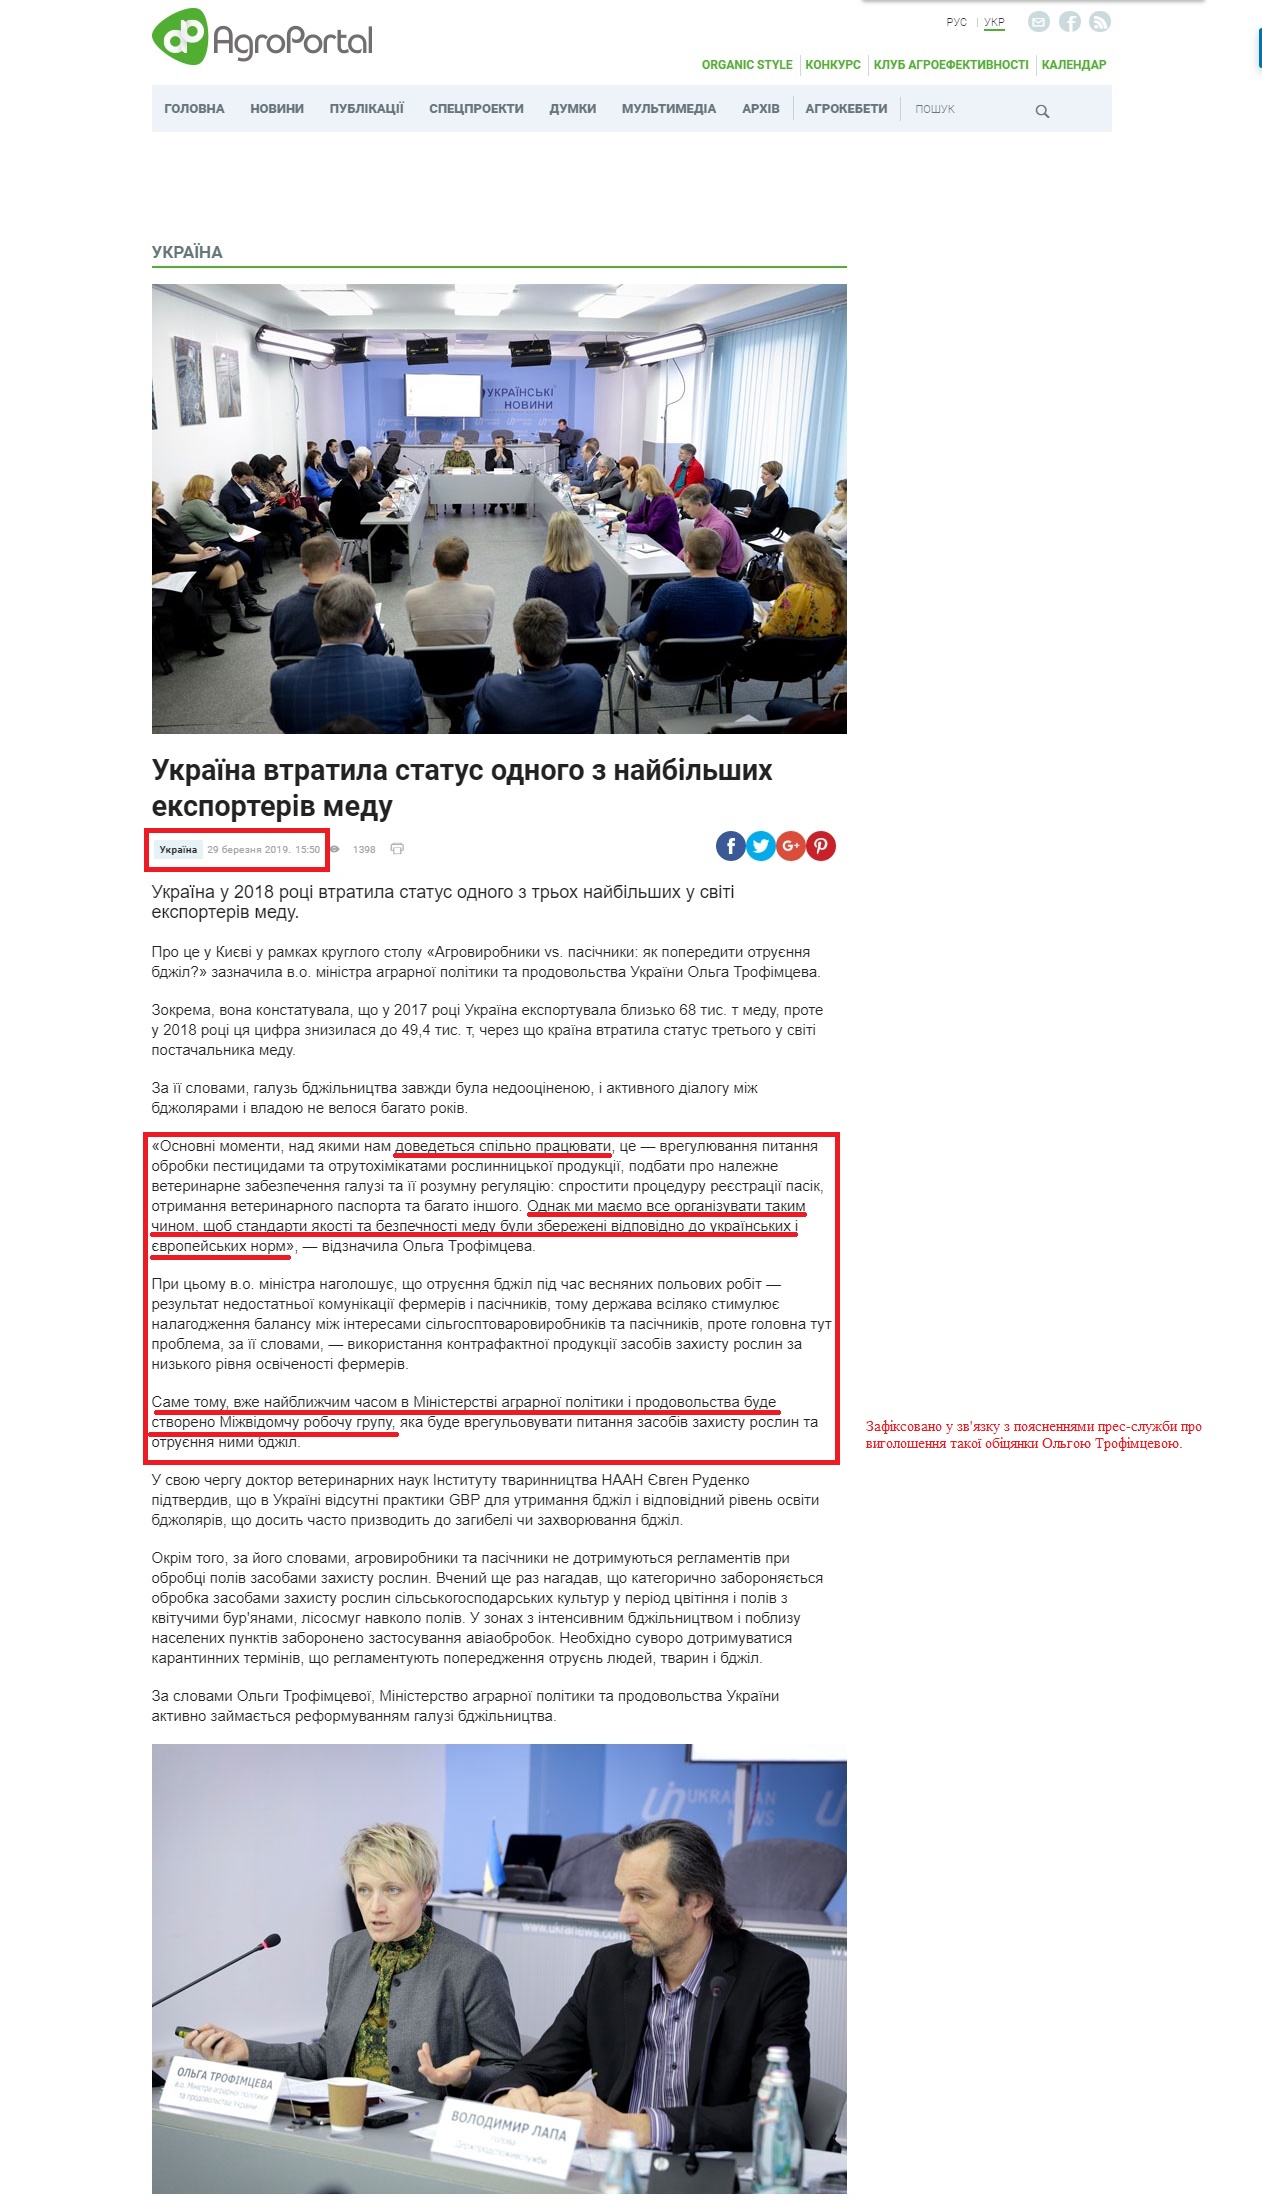 http://agroportal.ua/ua/news/ukraina/ukraina-lishilas-statusa-odnogo-iz-krupneishikh-proizvoditelei-meda/